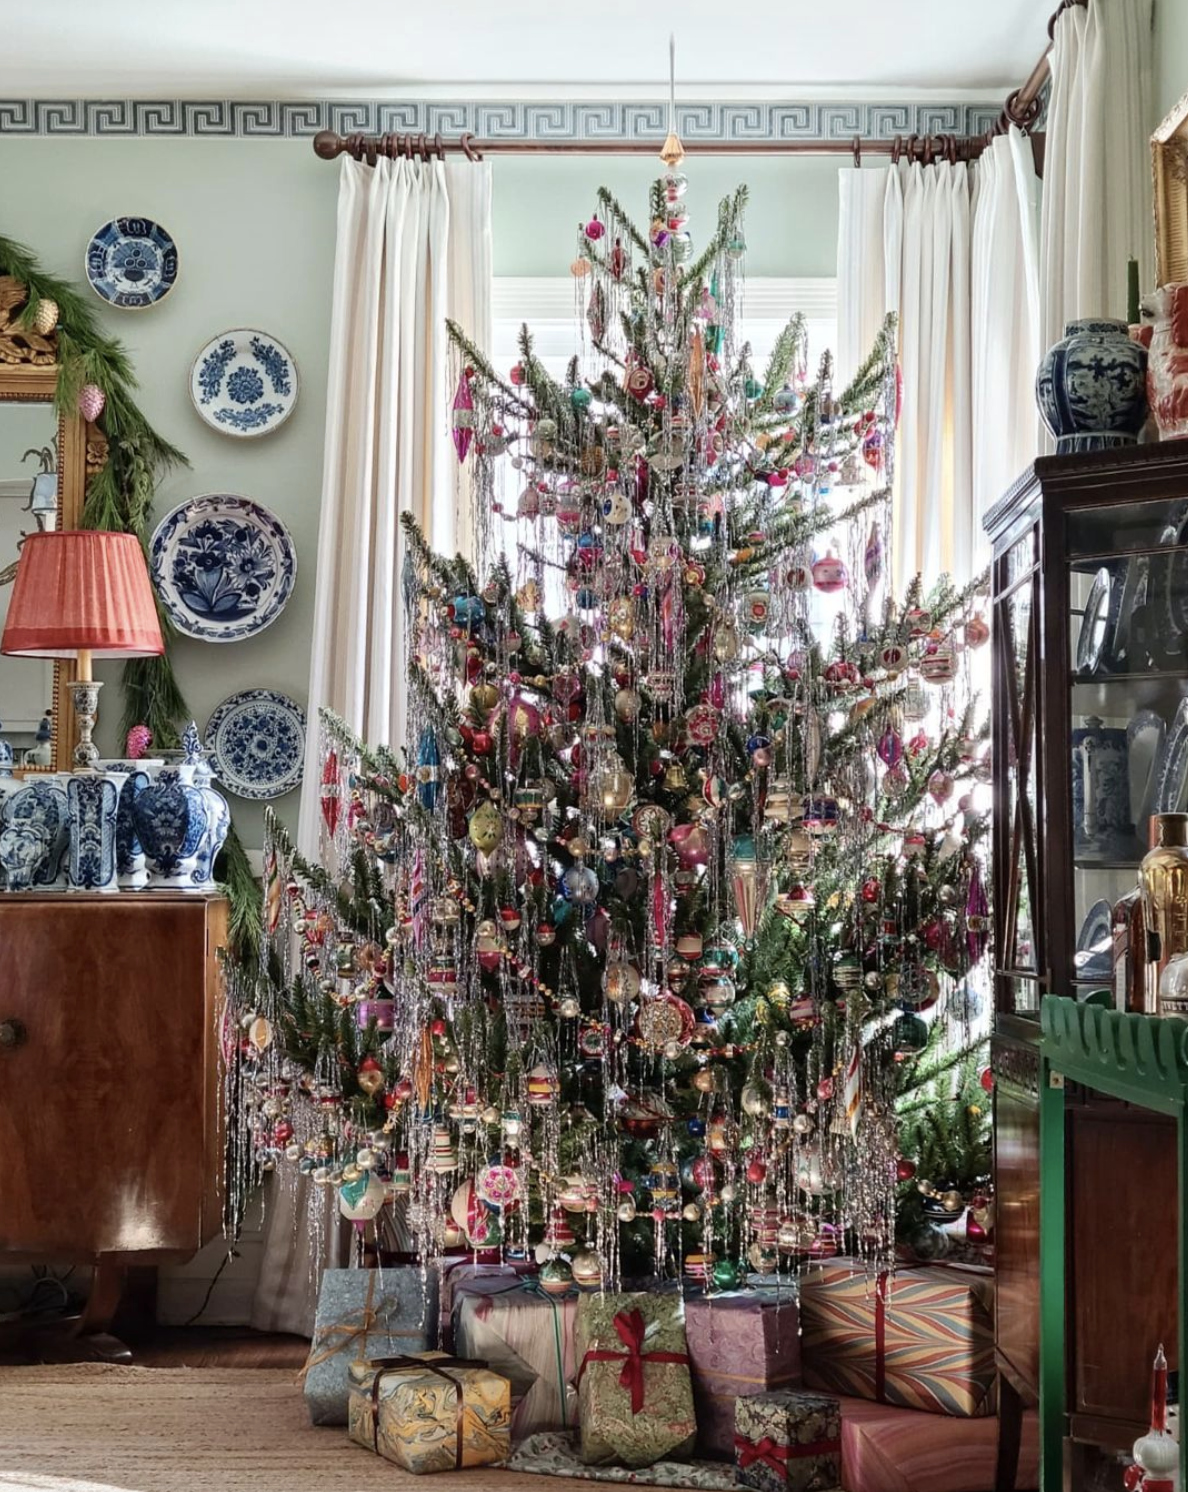 Where To Buy Christmas Tree Tinsel?